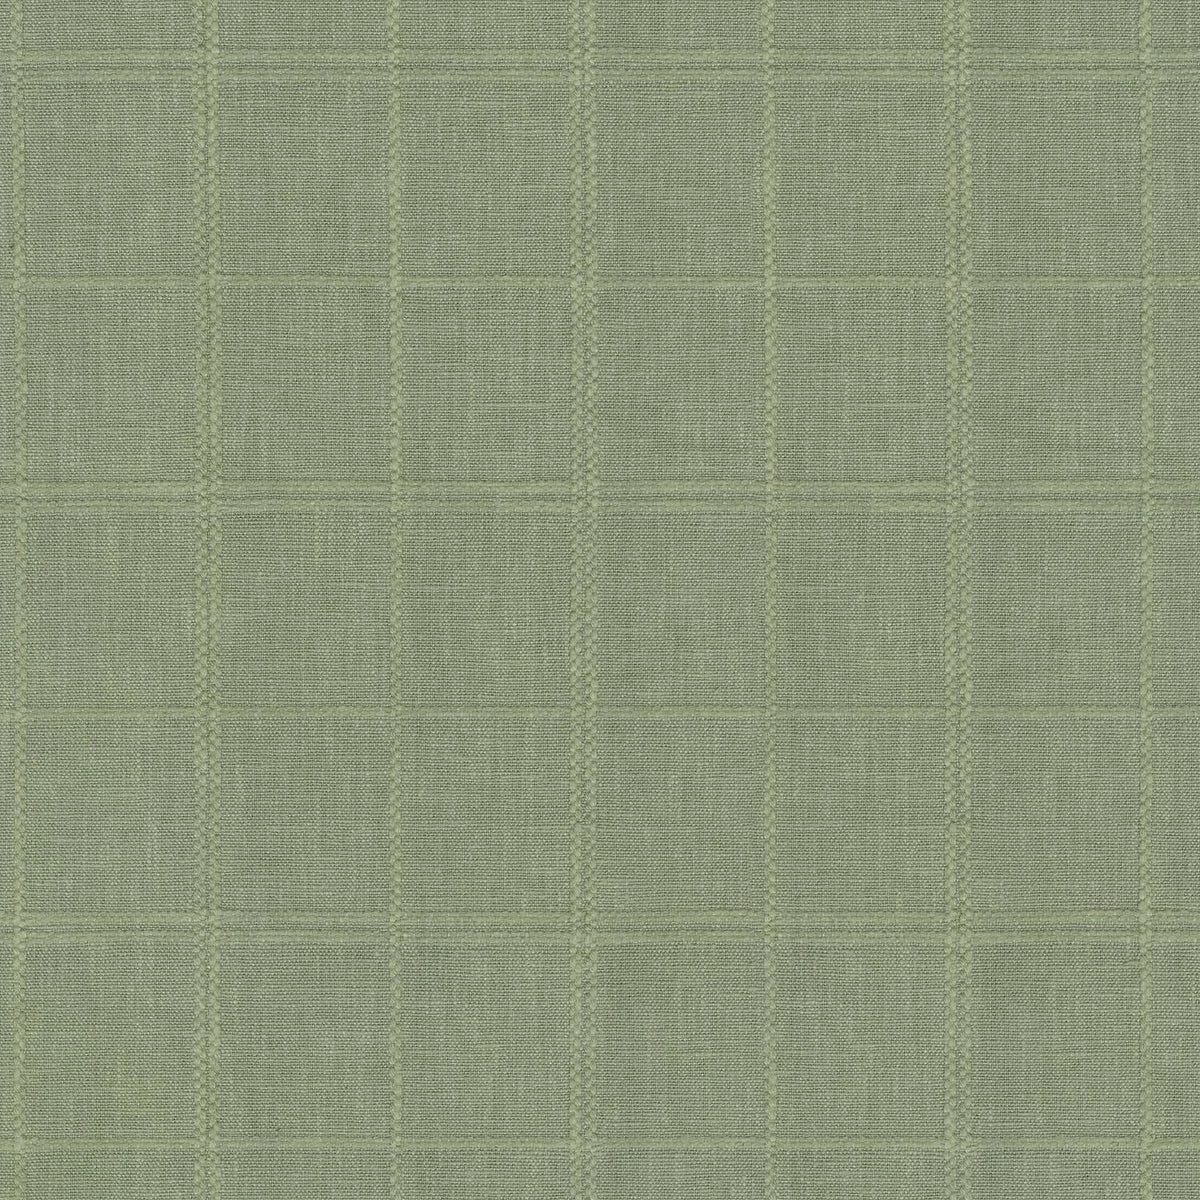 P/K Lifestyles Moray - Wintergreen 410657 Fabric Swatch